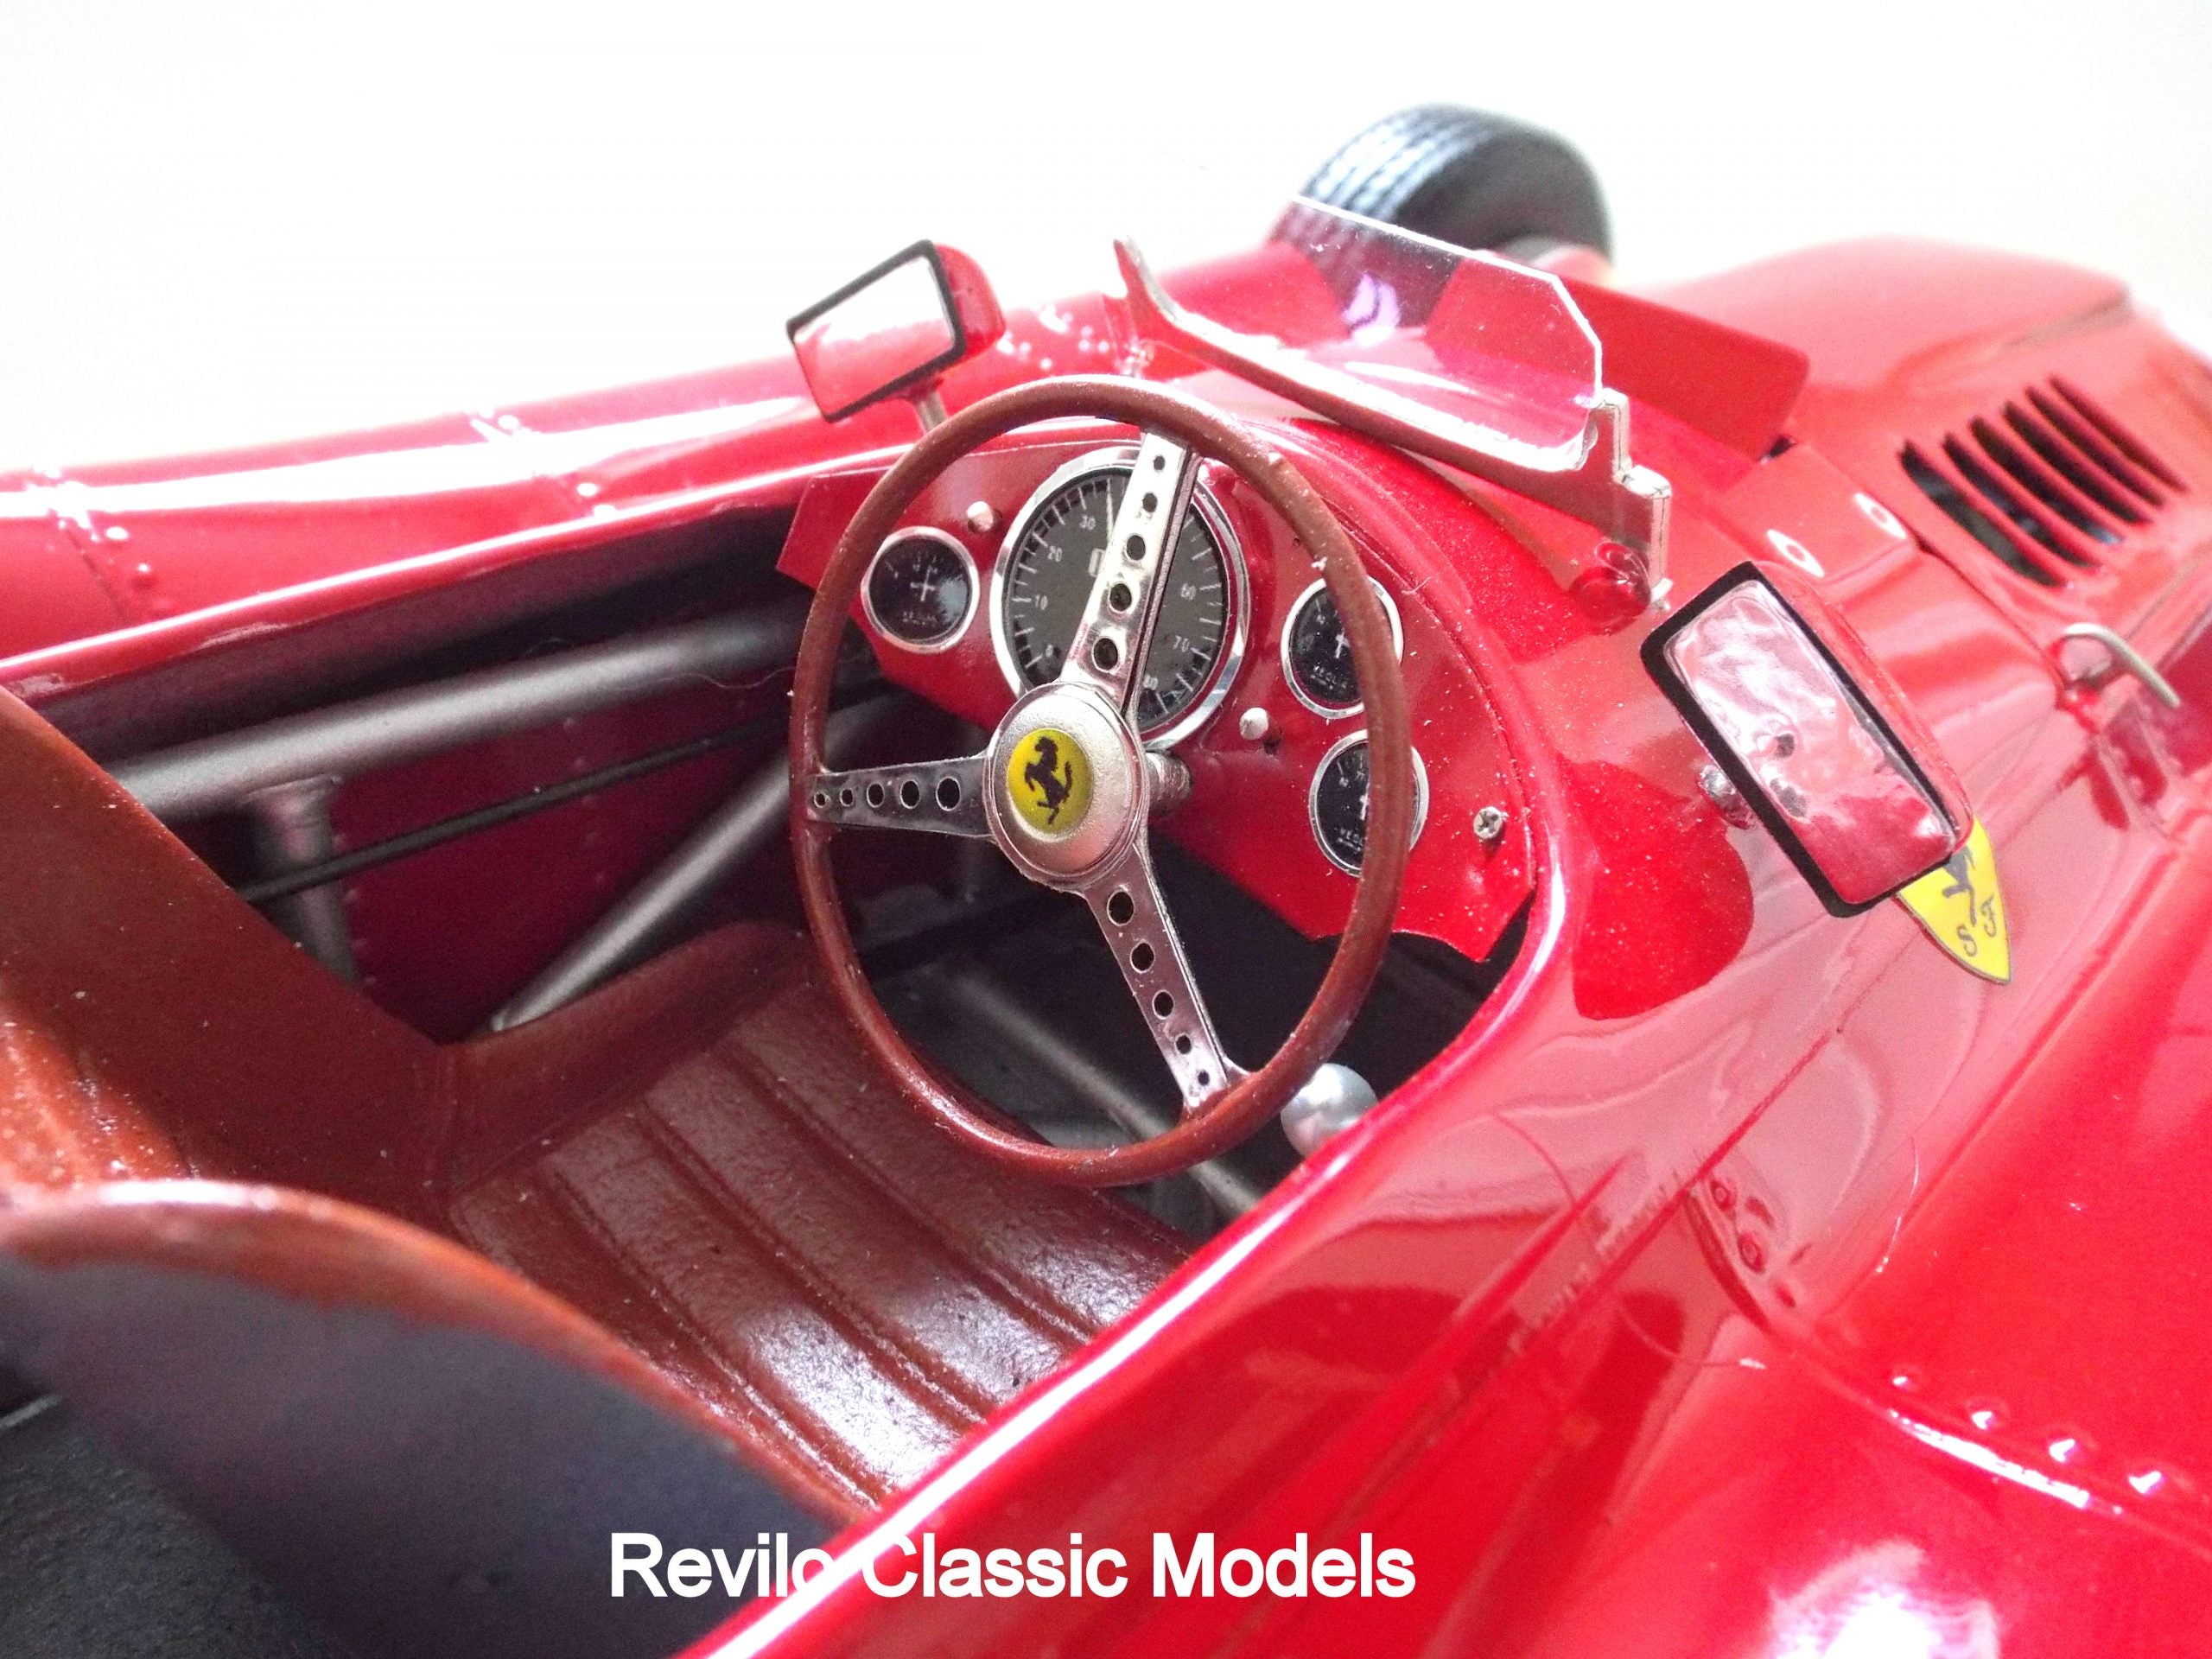 1:8 scale Ferrari D50 1956 Handbuilt model by Javan Smith